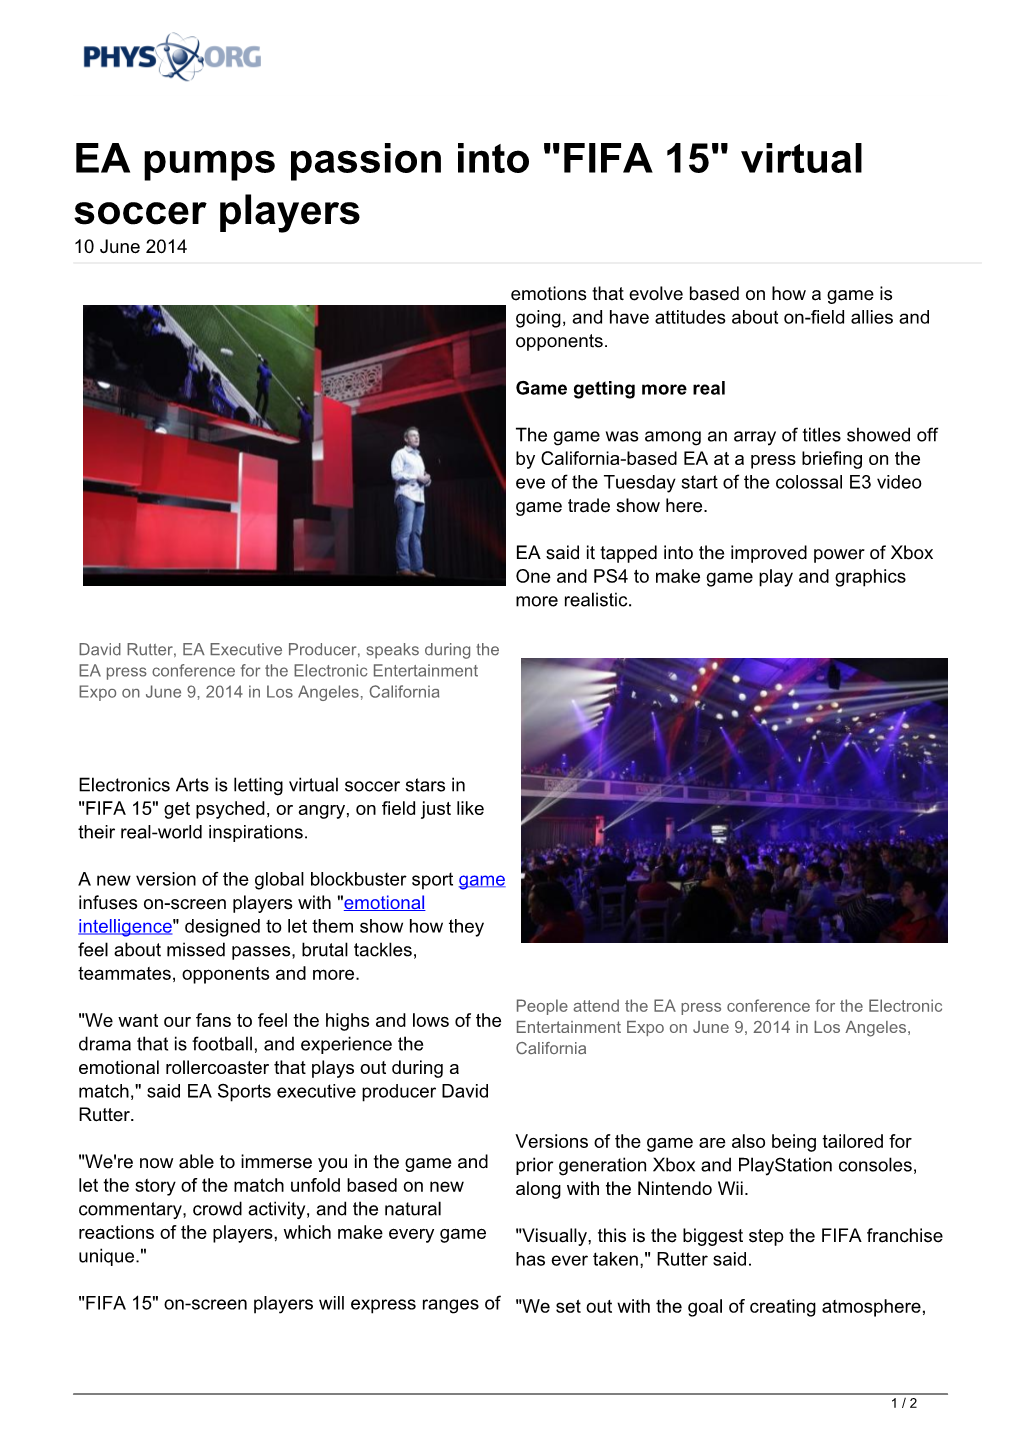 EA Pumps Passion Into "FIFA 15" Virtual Soccer Players 10 June 2014